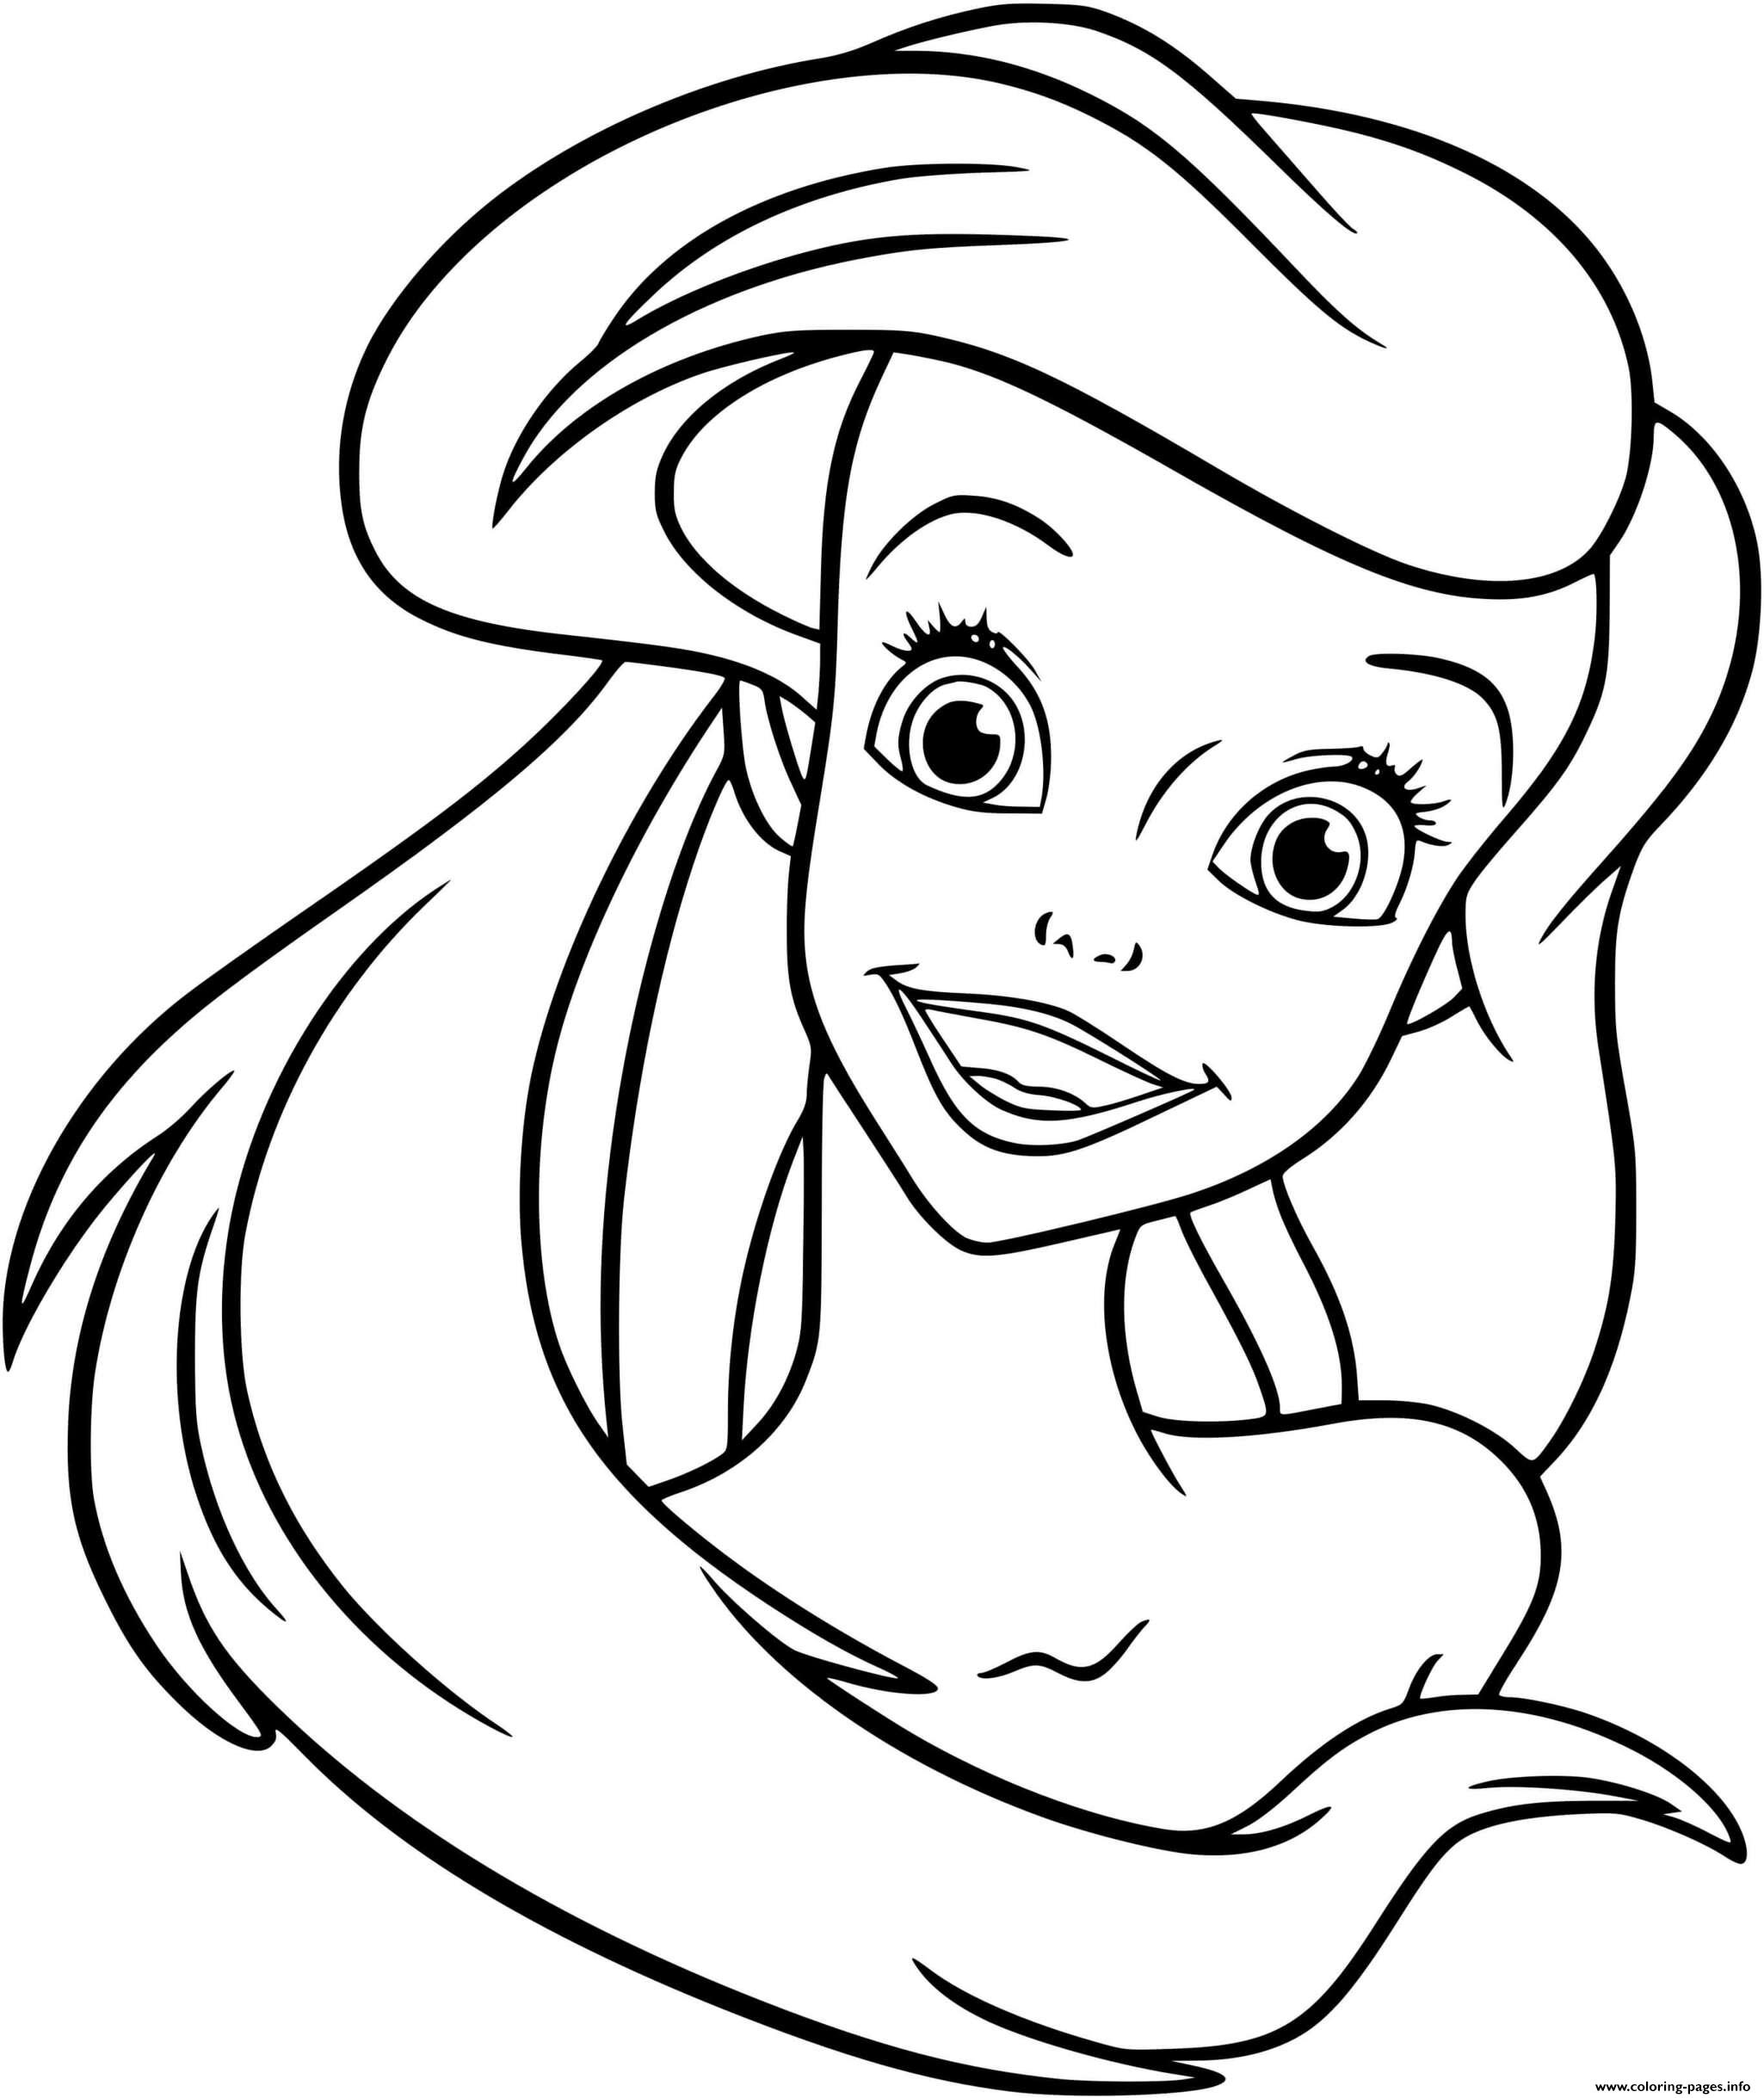 Princess Ariel The Little Mermaid coloring